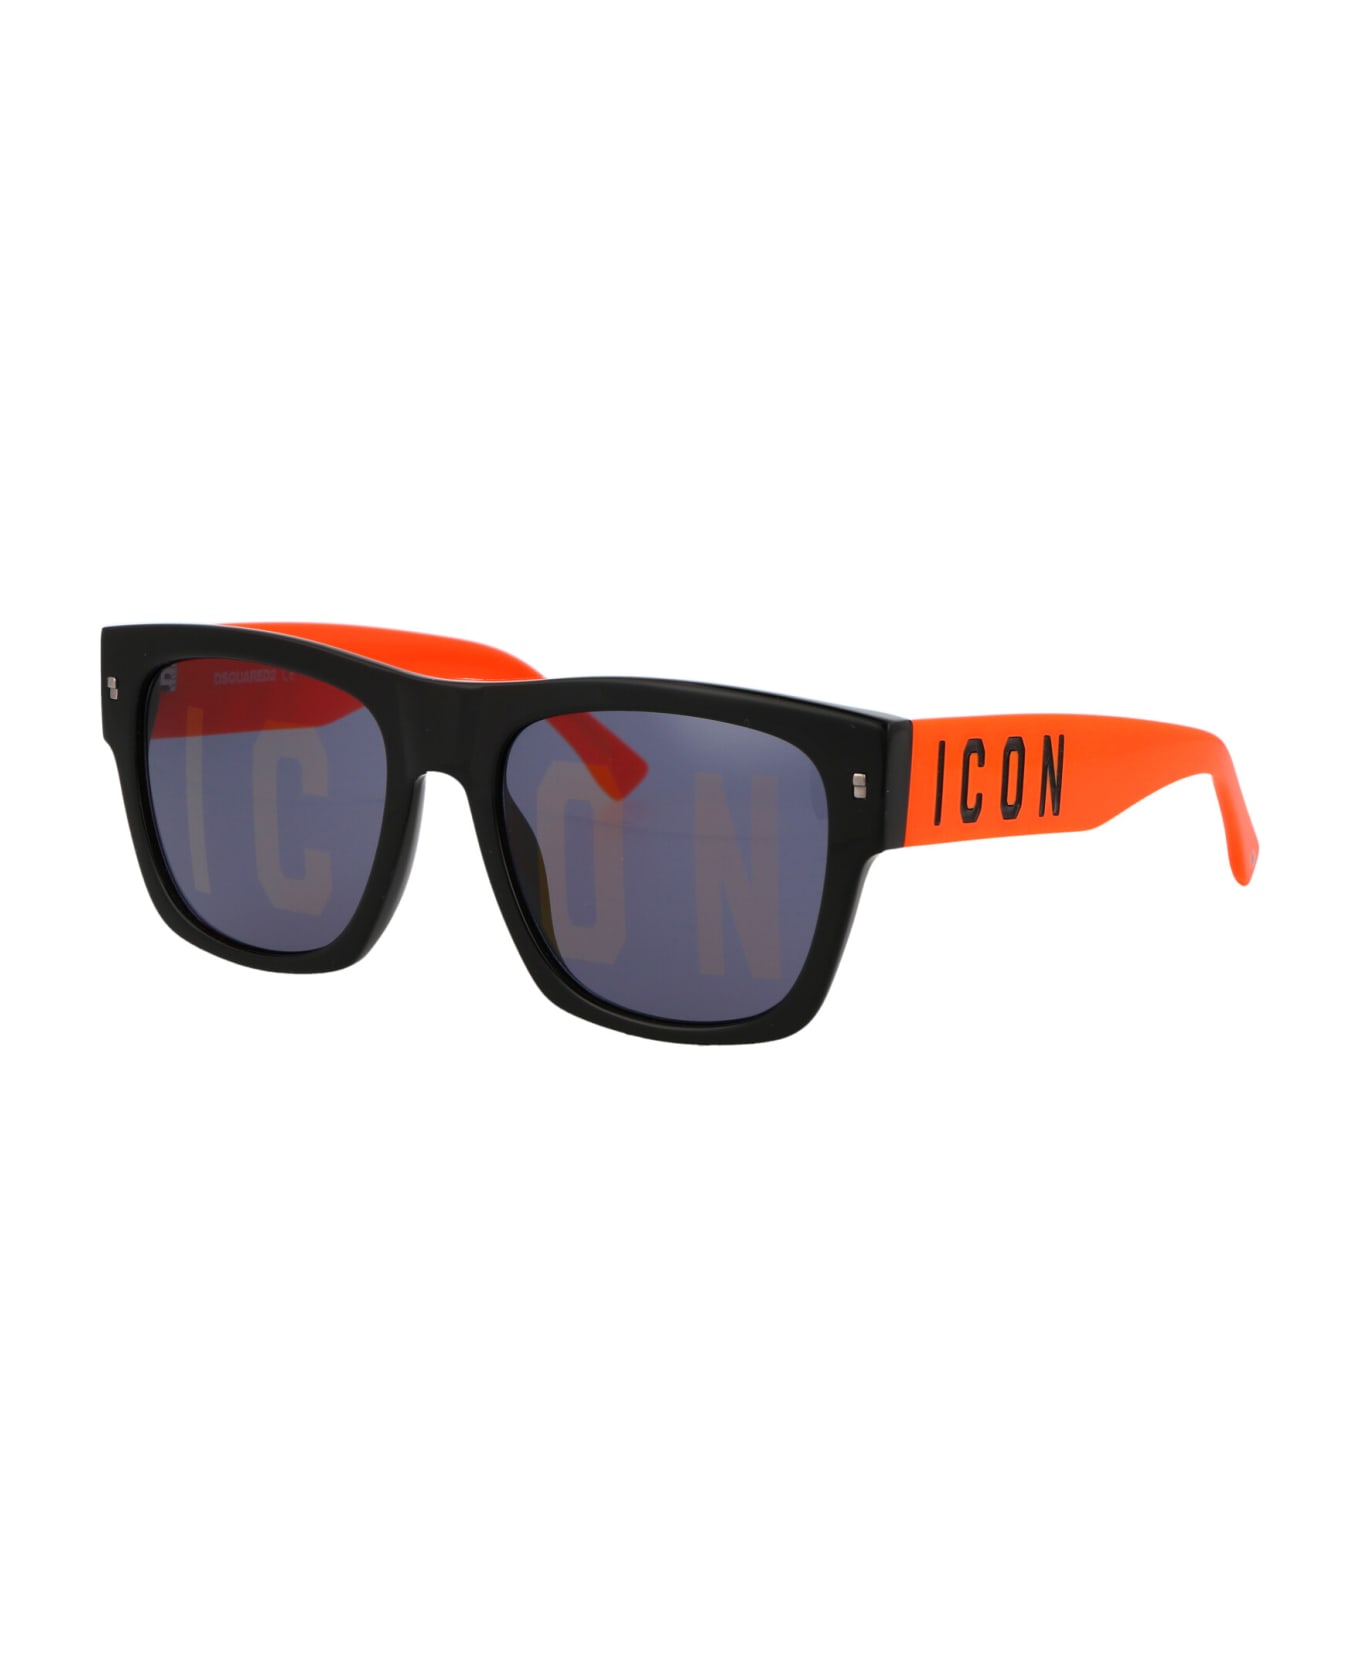 Dsquared2 Eyewear Icon 0004/s Sunglasses latest - 8AJ Morgan round sunglasses latest in black with studs